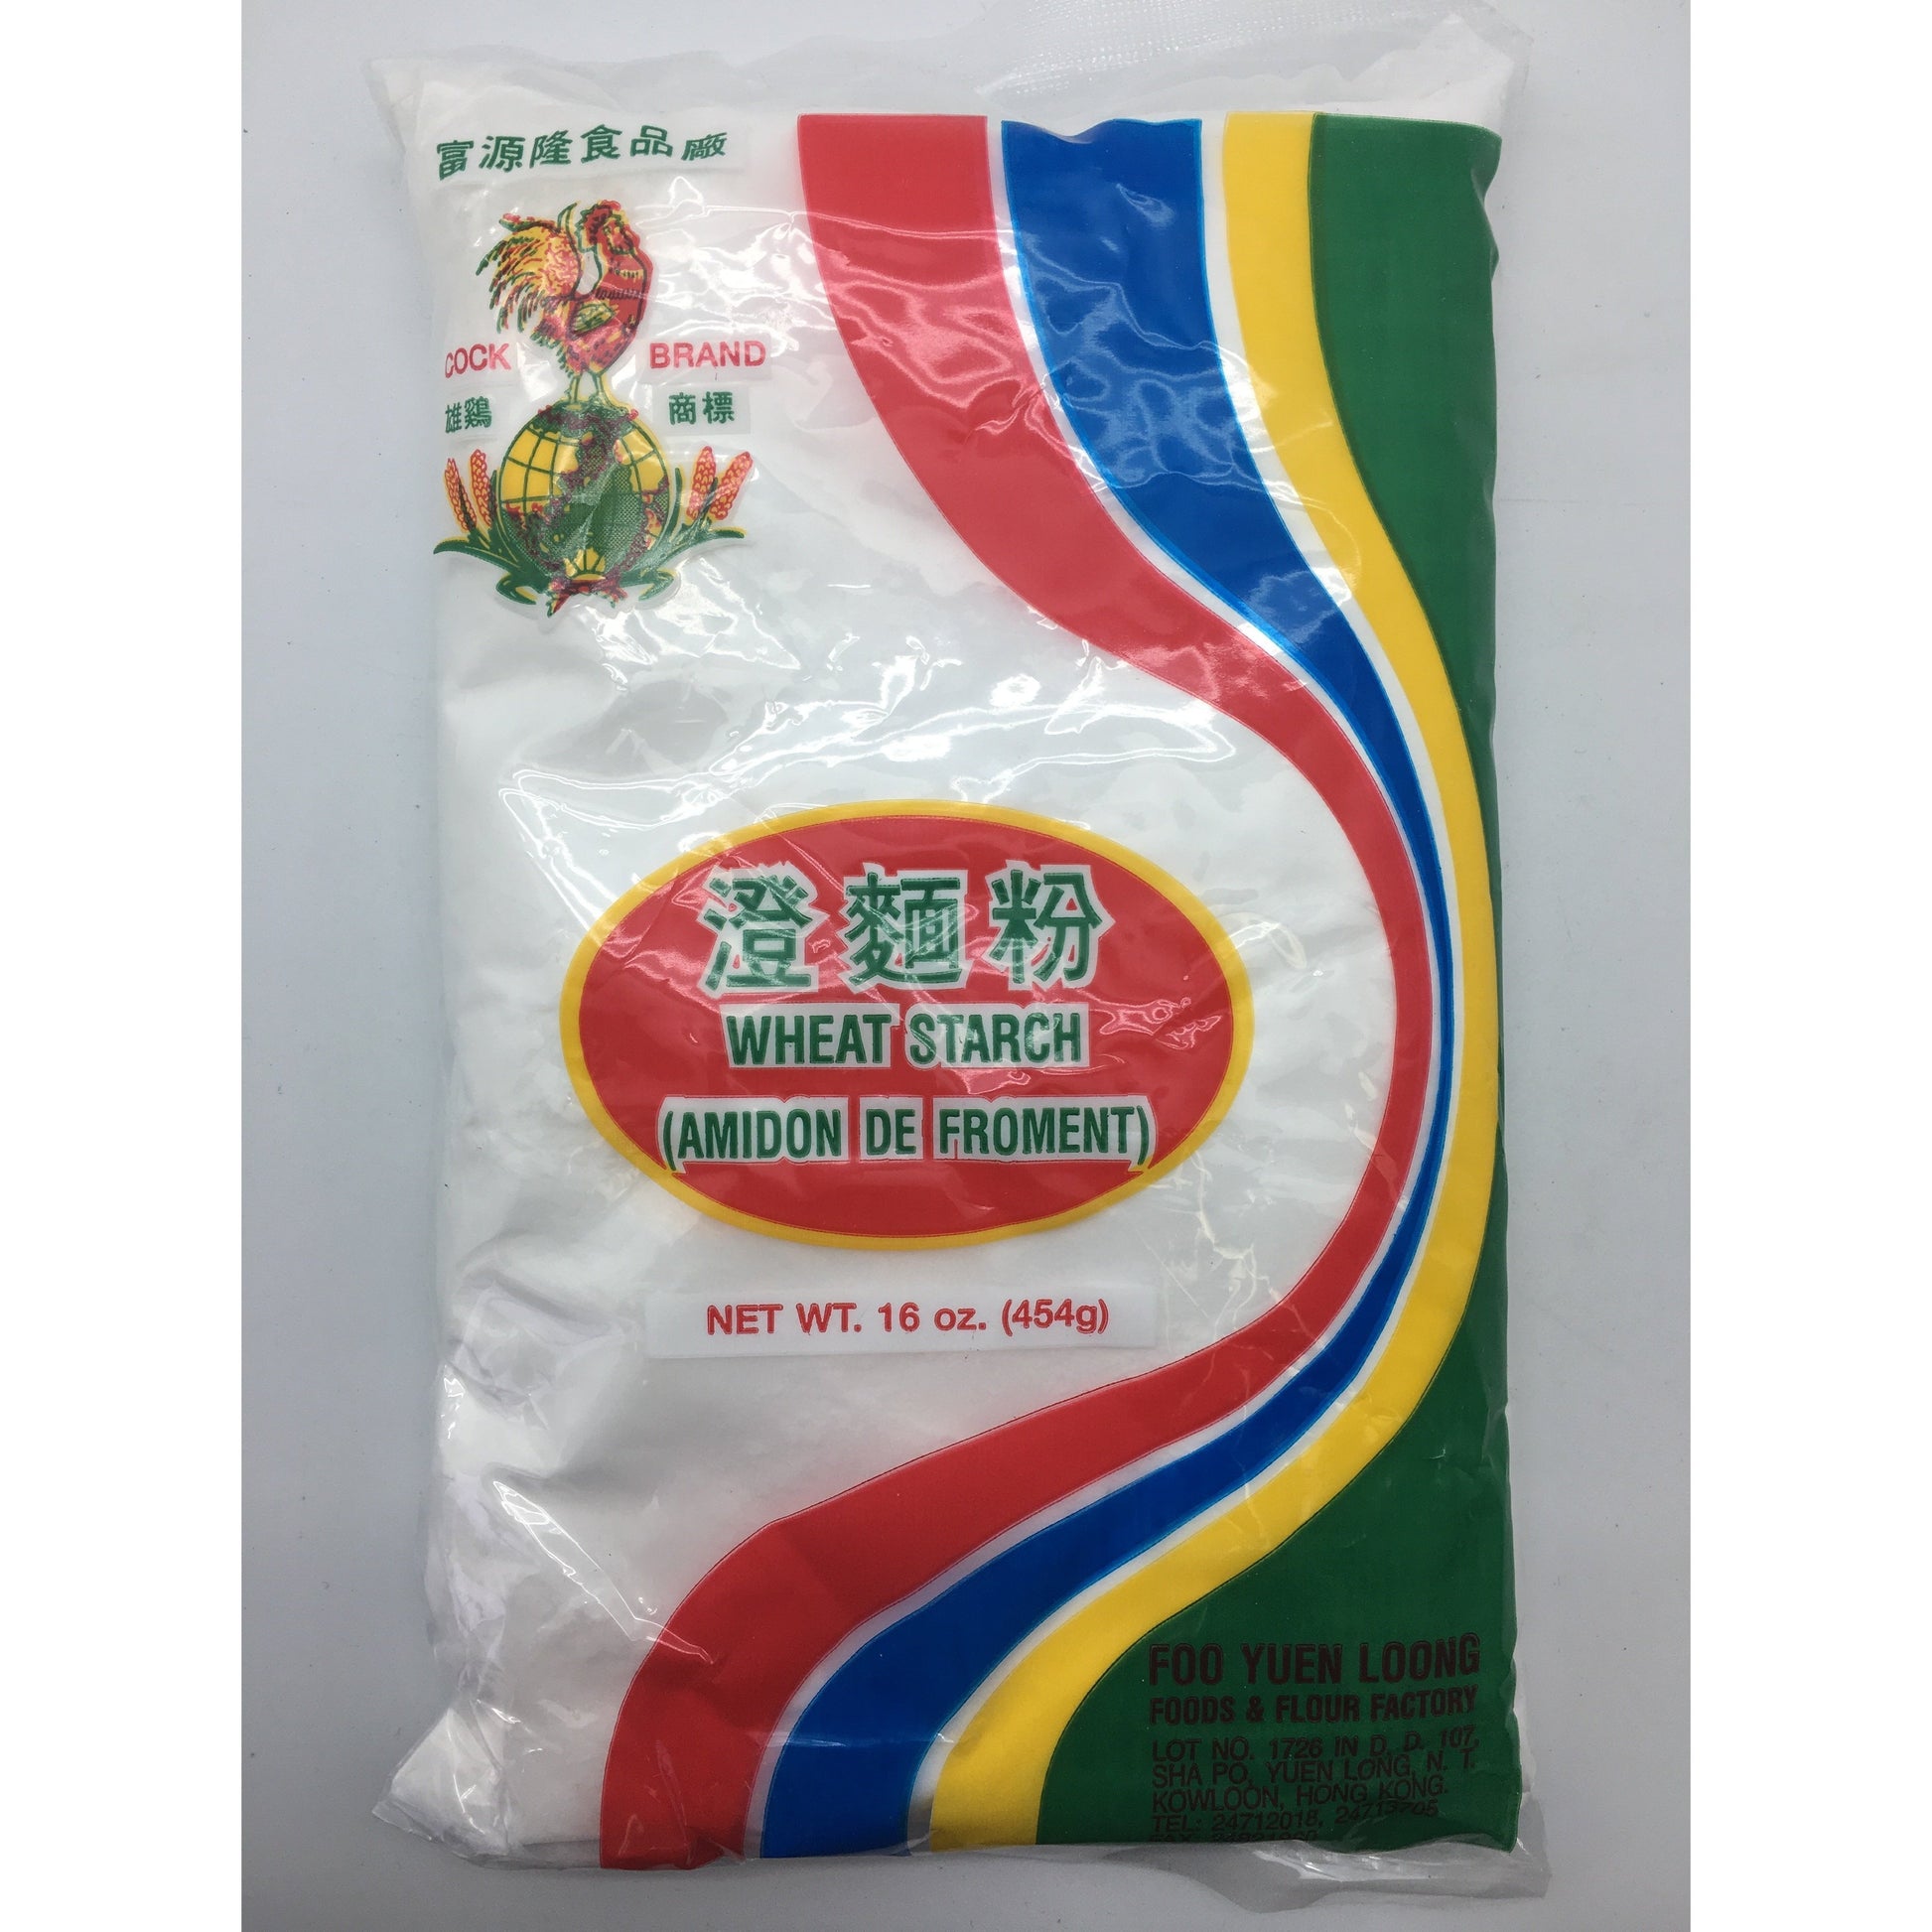 PD010 Cock Brand -Wheat Starch 454g - 25 bags / 1CTN - New Eastland Pty Ltd - Asian food wholesalers